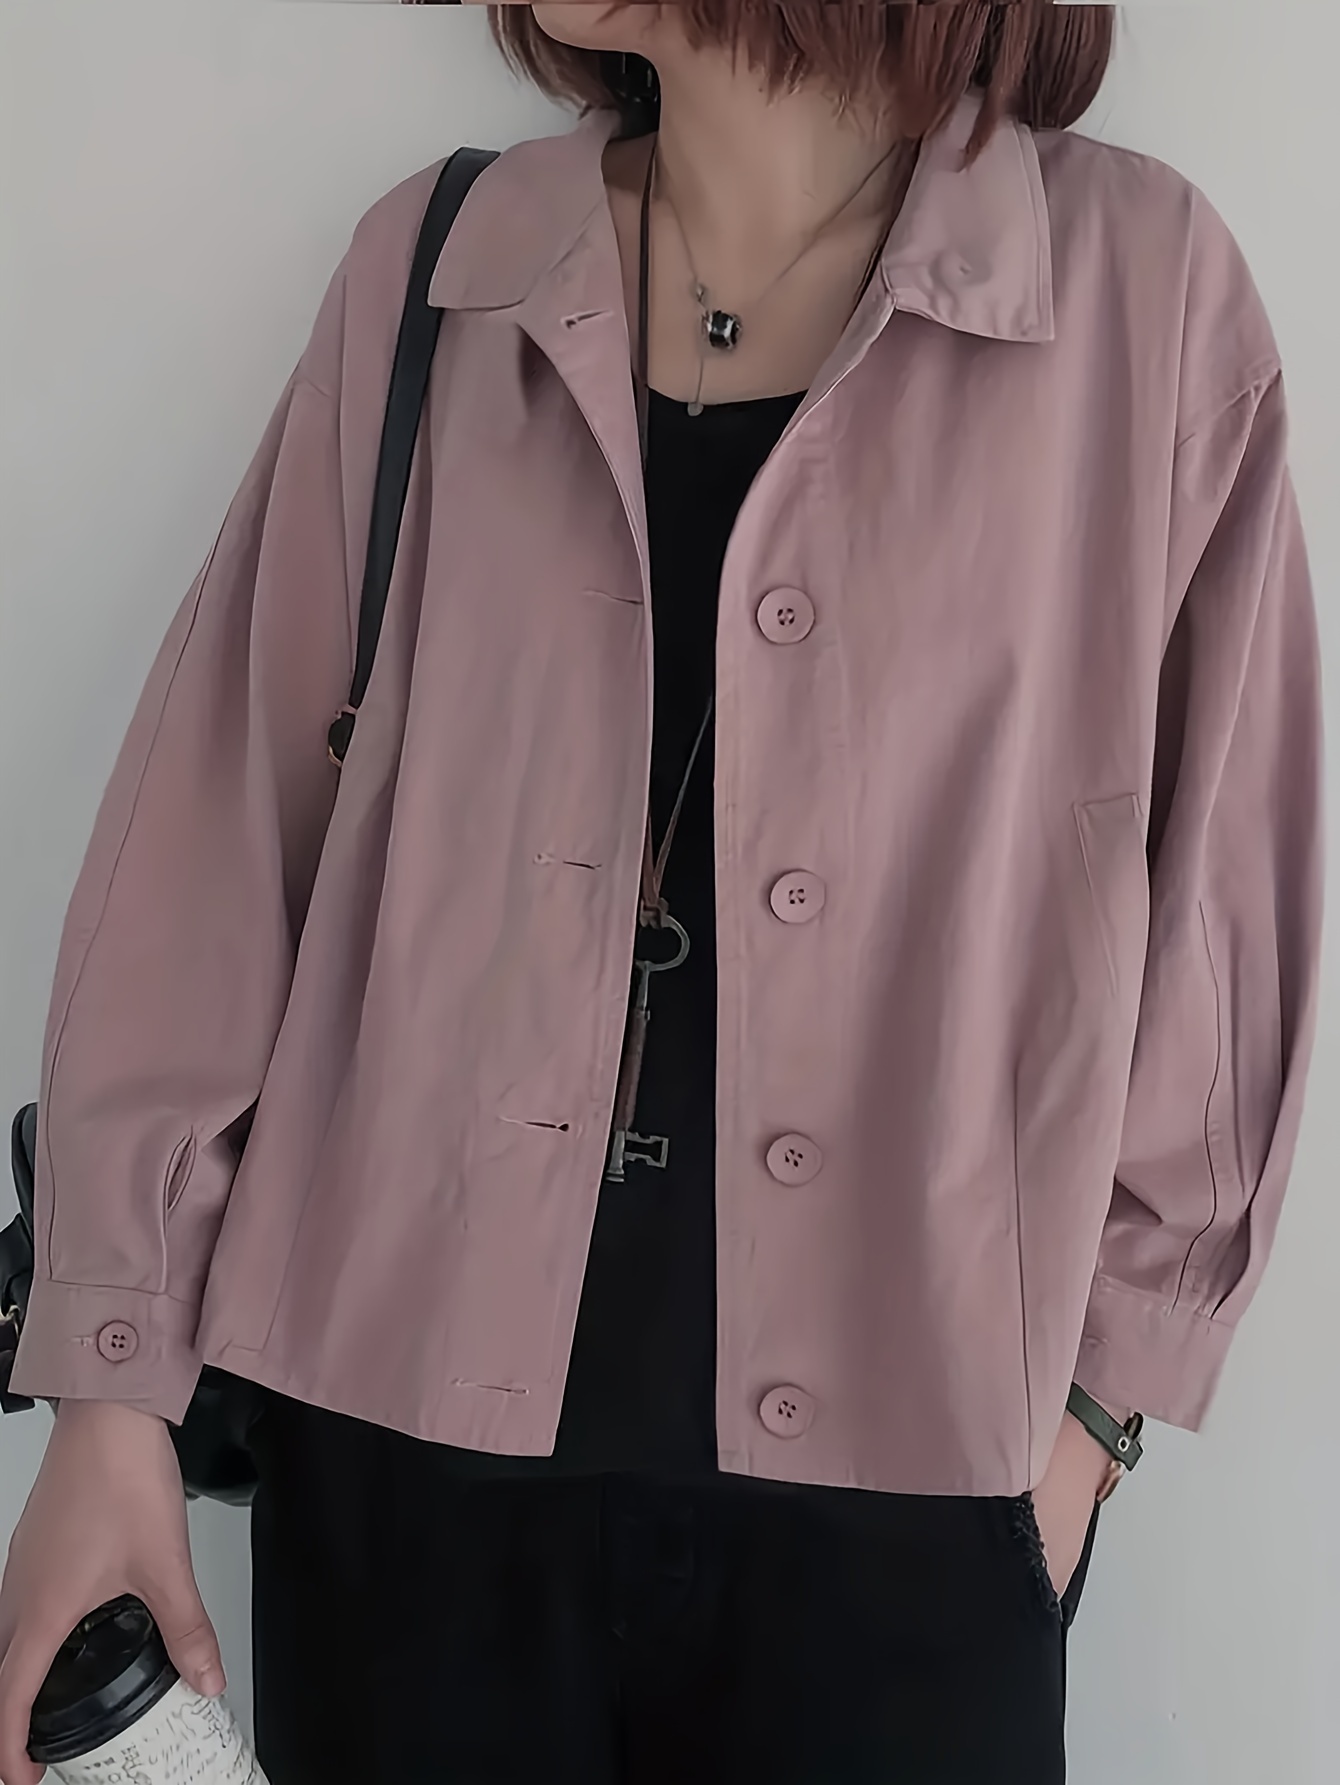 Buy LD Womens Lapel Long Sleeve Casual Long Blazer Suit Jacket Outwear Coat  Grey L at